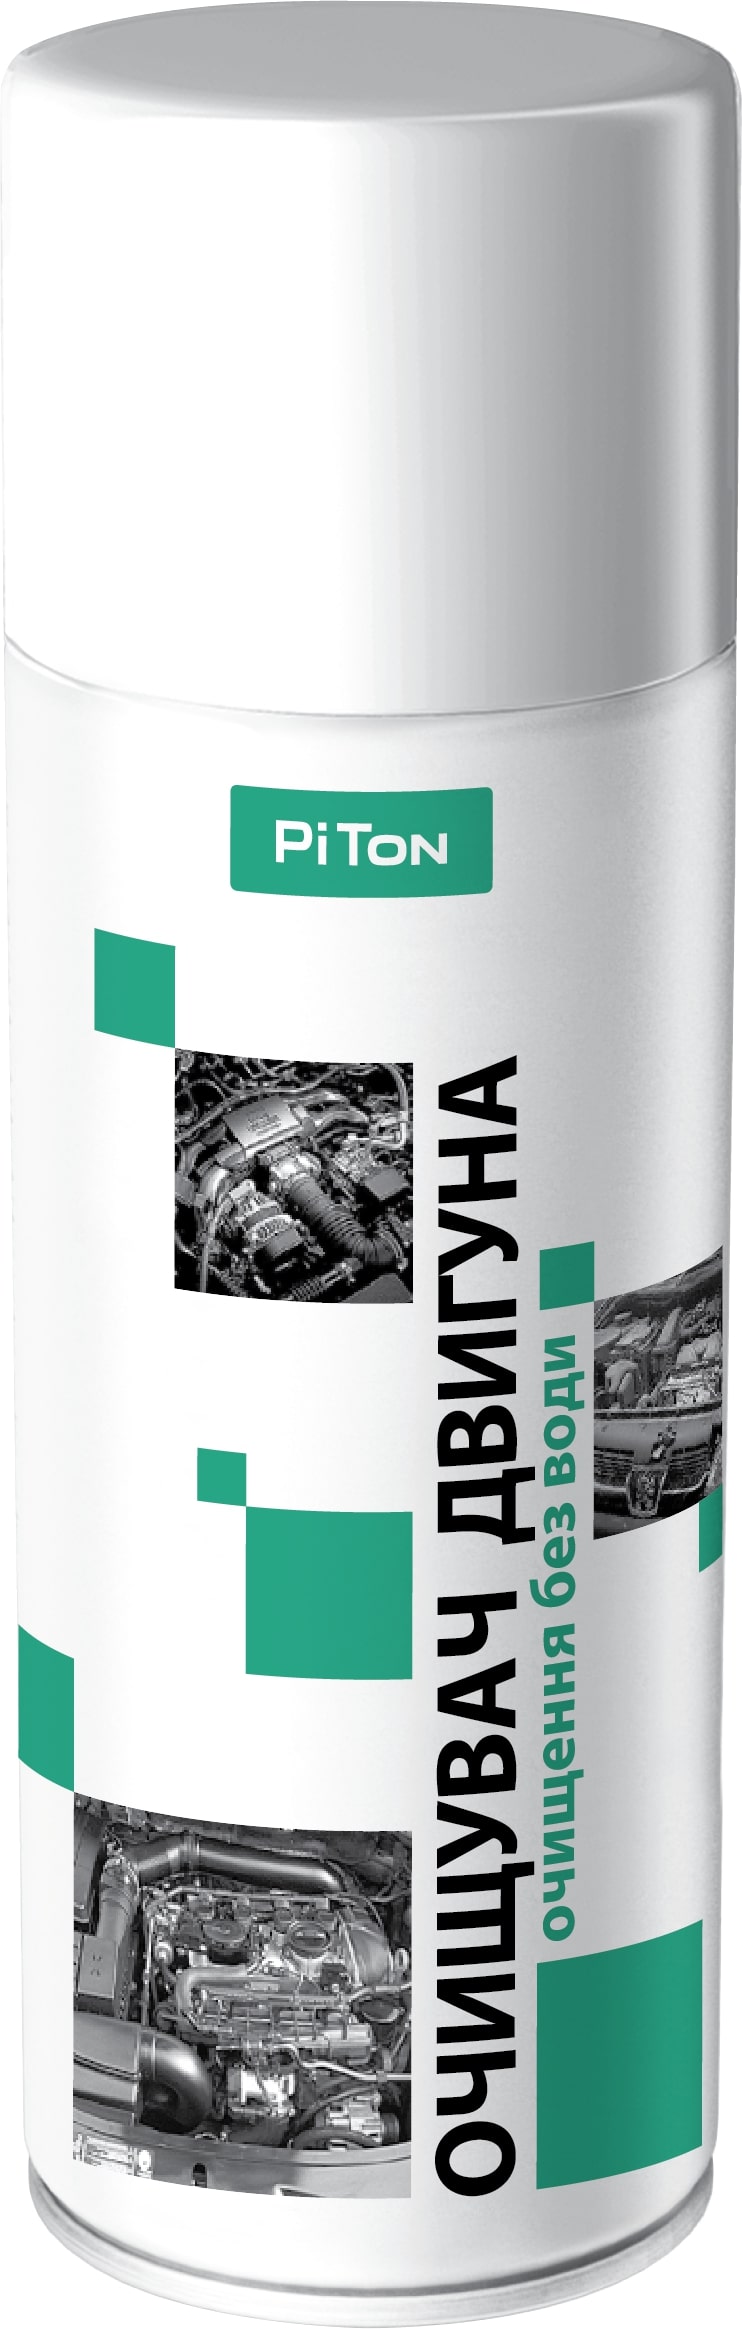 Очиститель двигателя PITON 400мл PITON 000008622